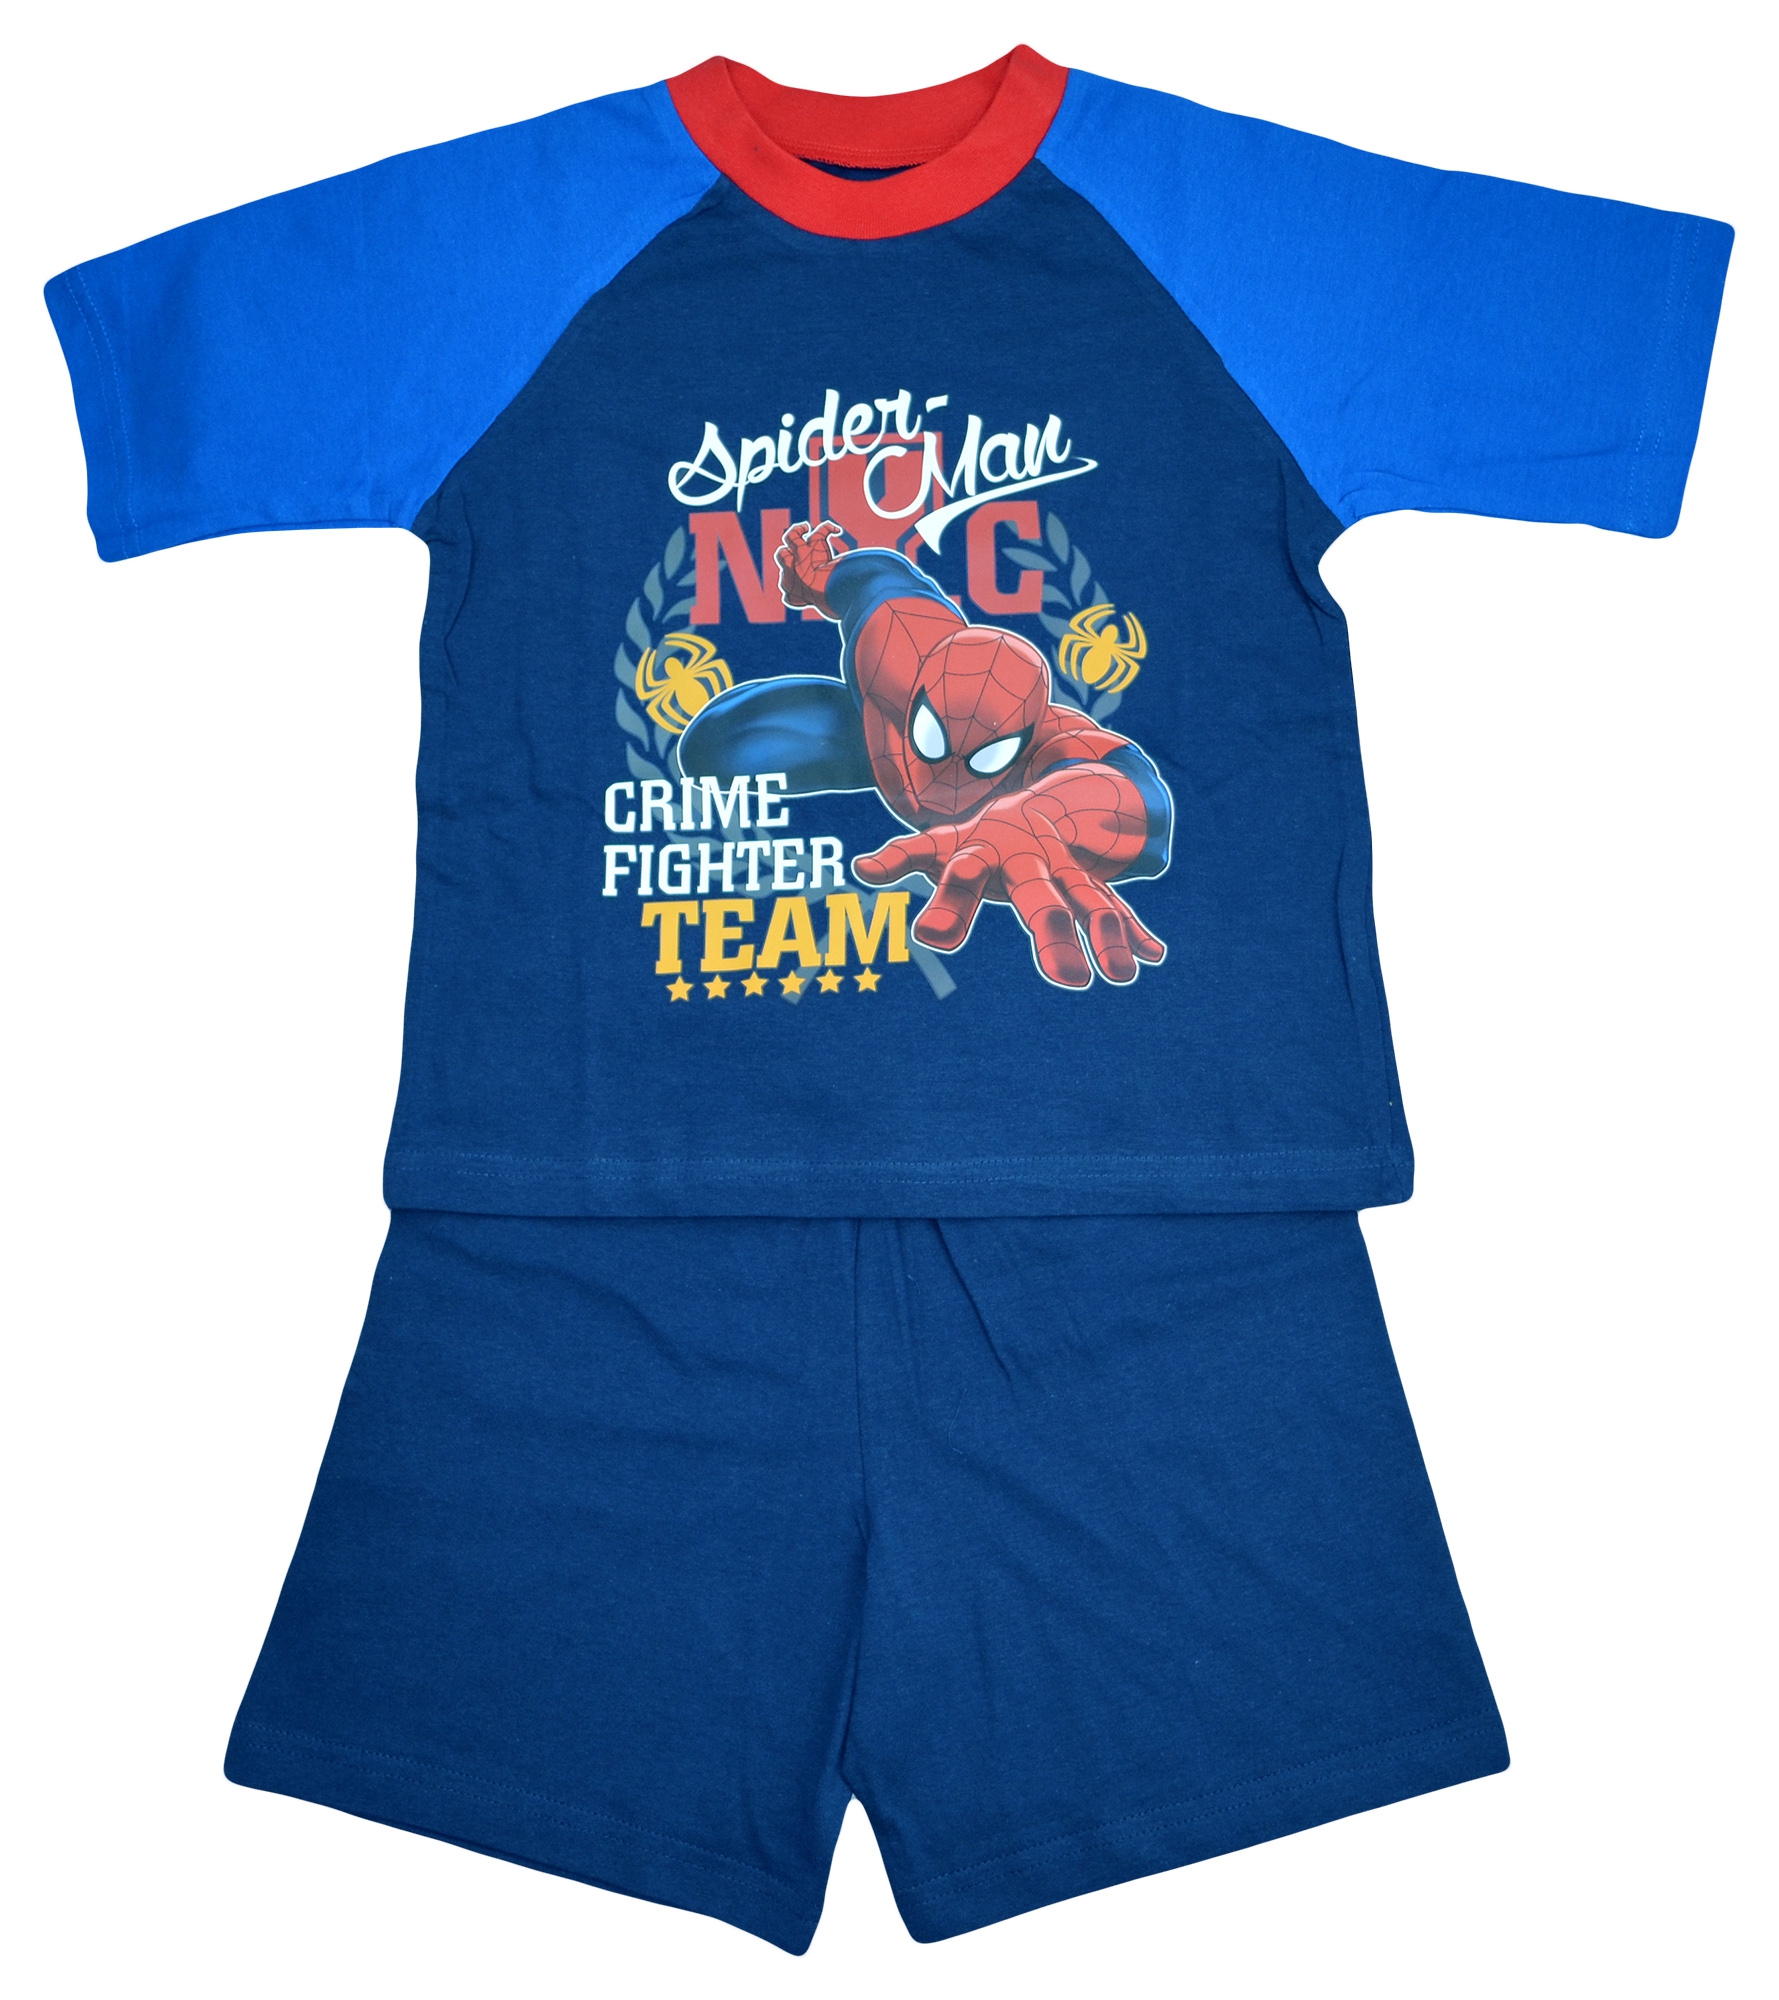 Spiderman 'Crime Fighter' Boys Short Pyjama Set 9-10 Years